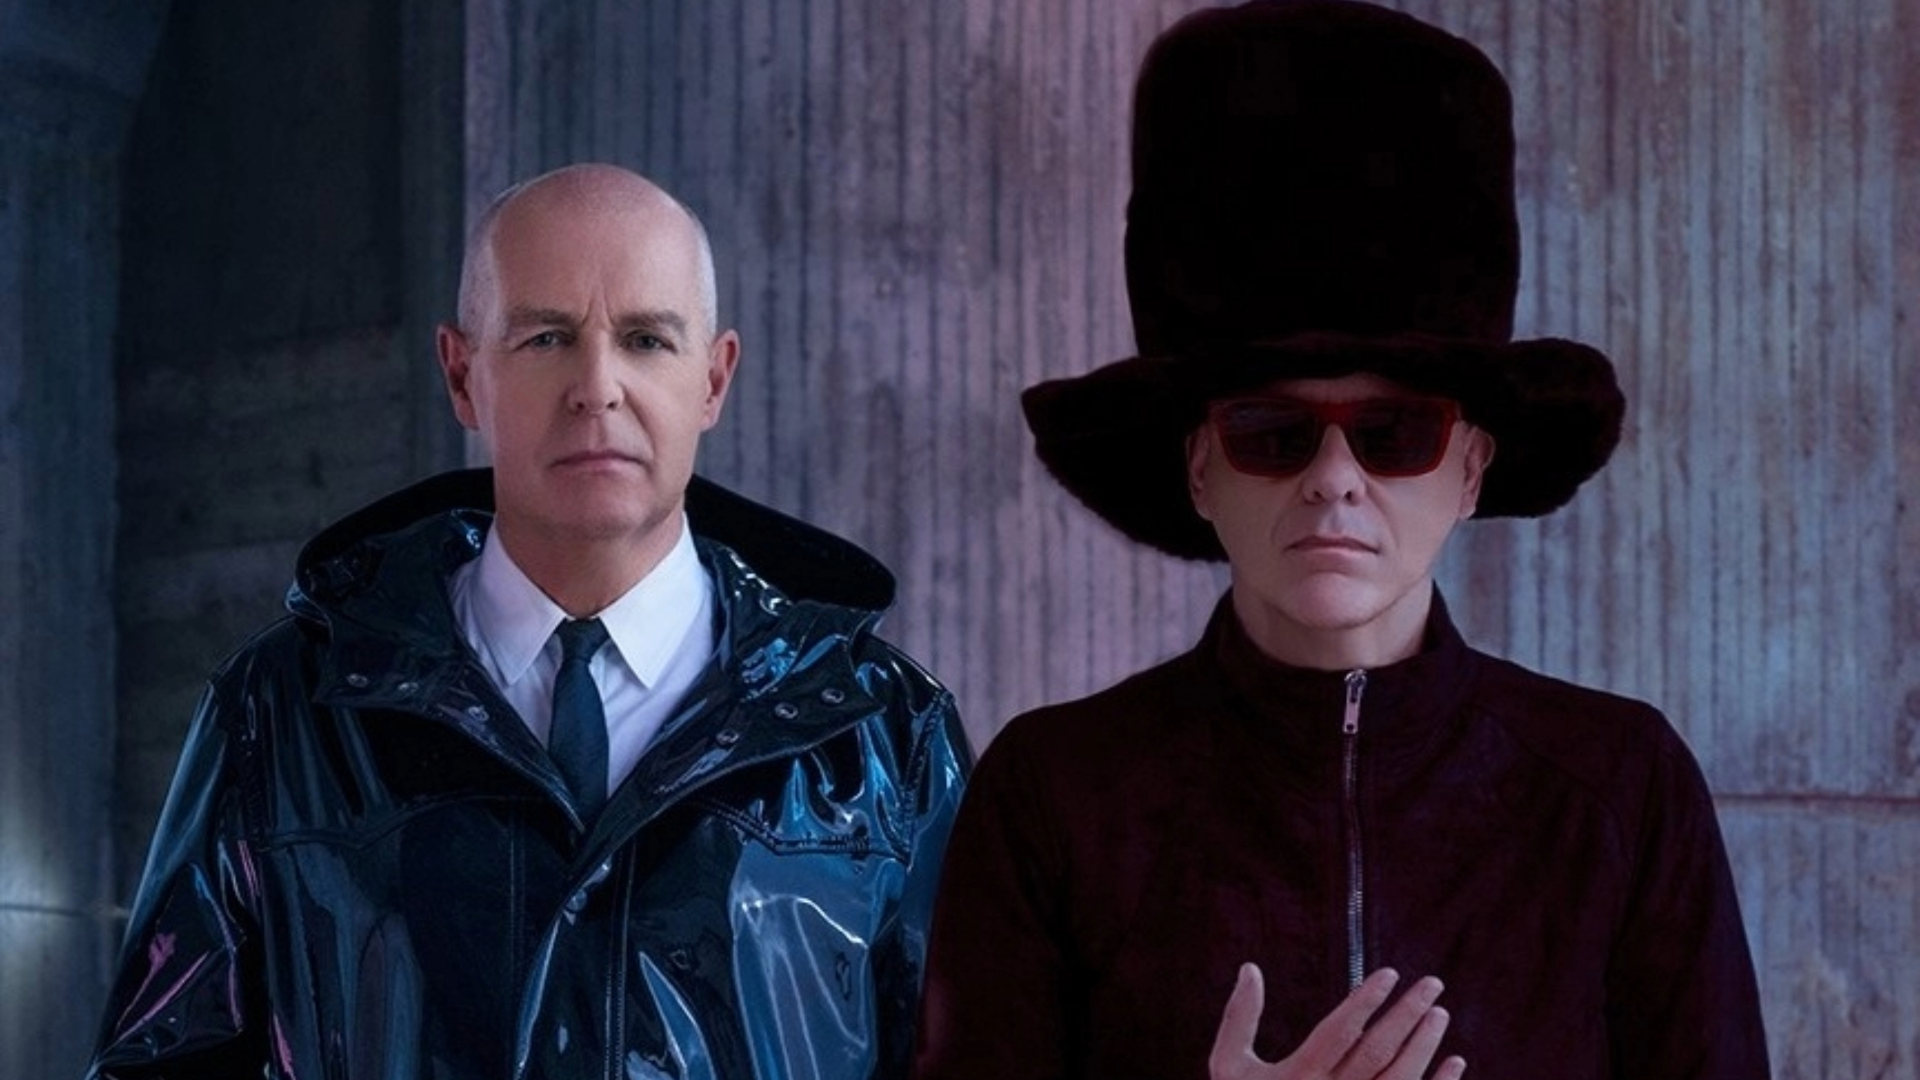 Pet Shop Boys play Brighton Centre on their 'Dreamworld: The Great